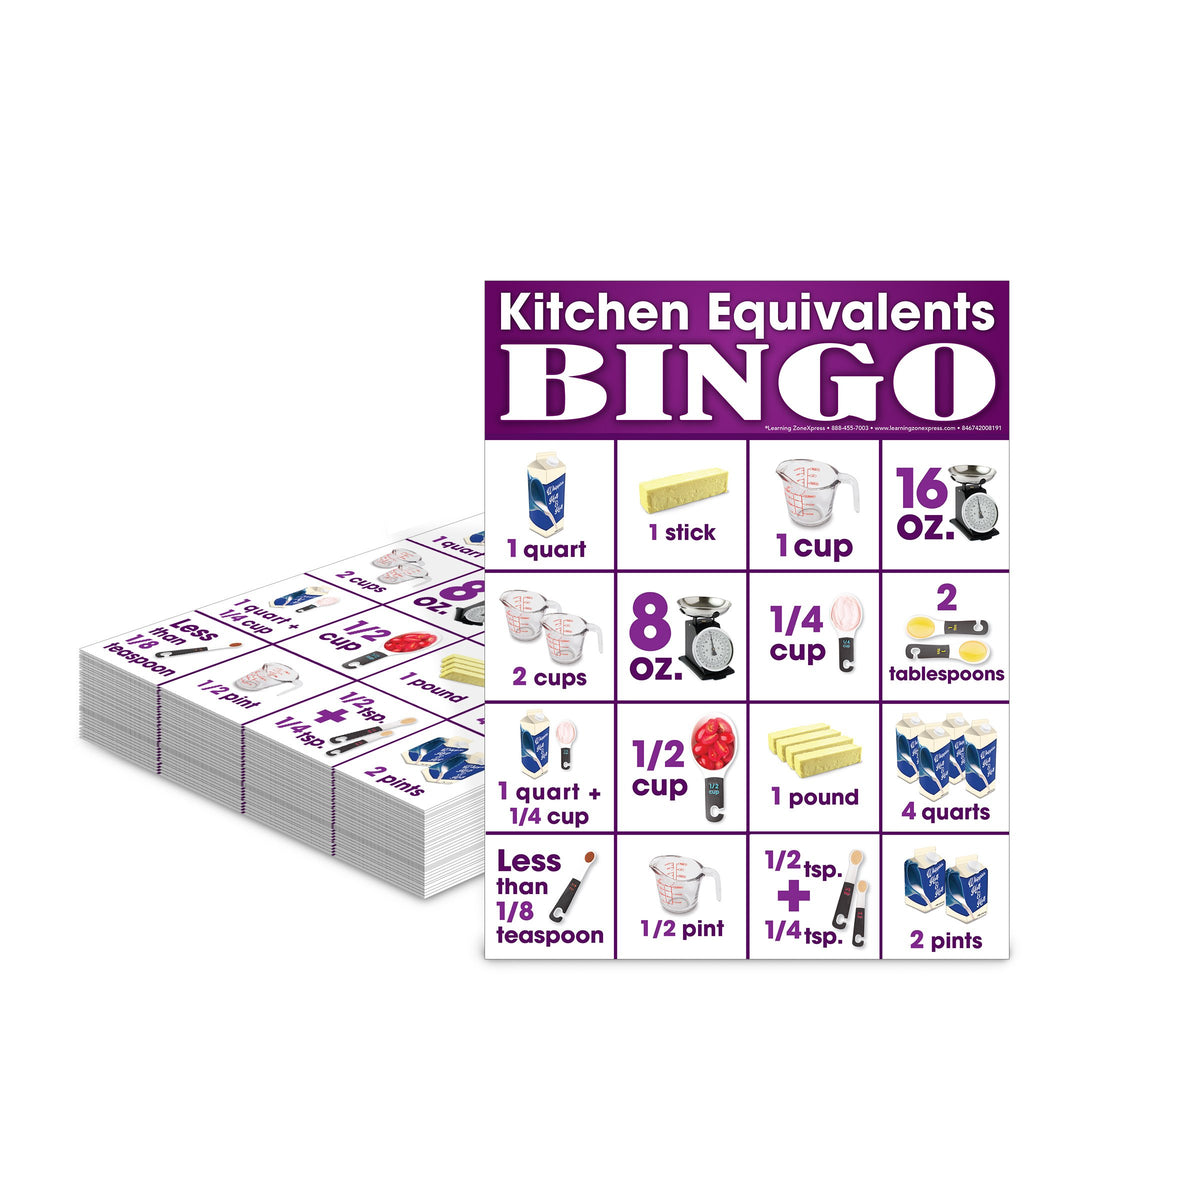 Kitchen Equivalents Bingo